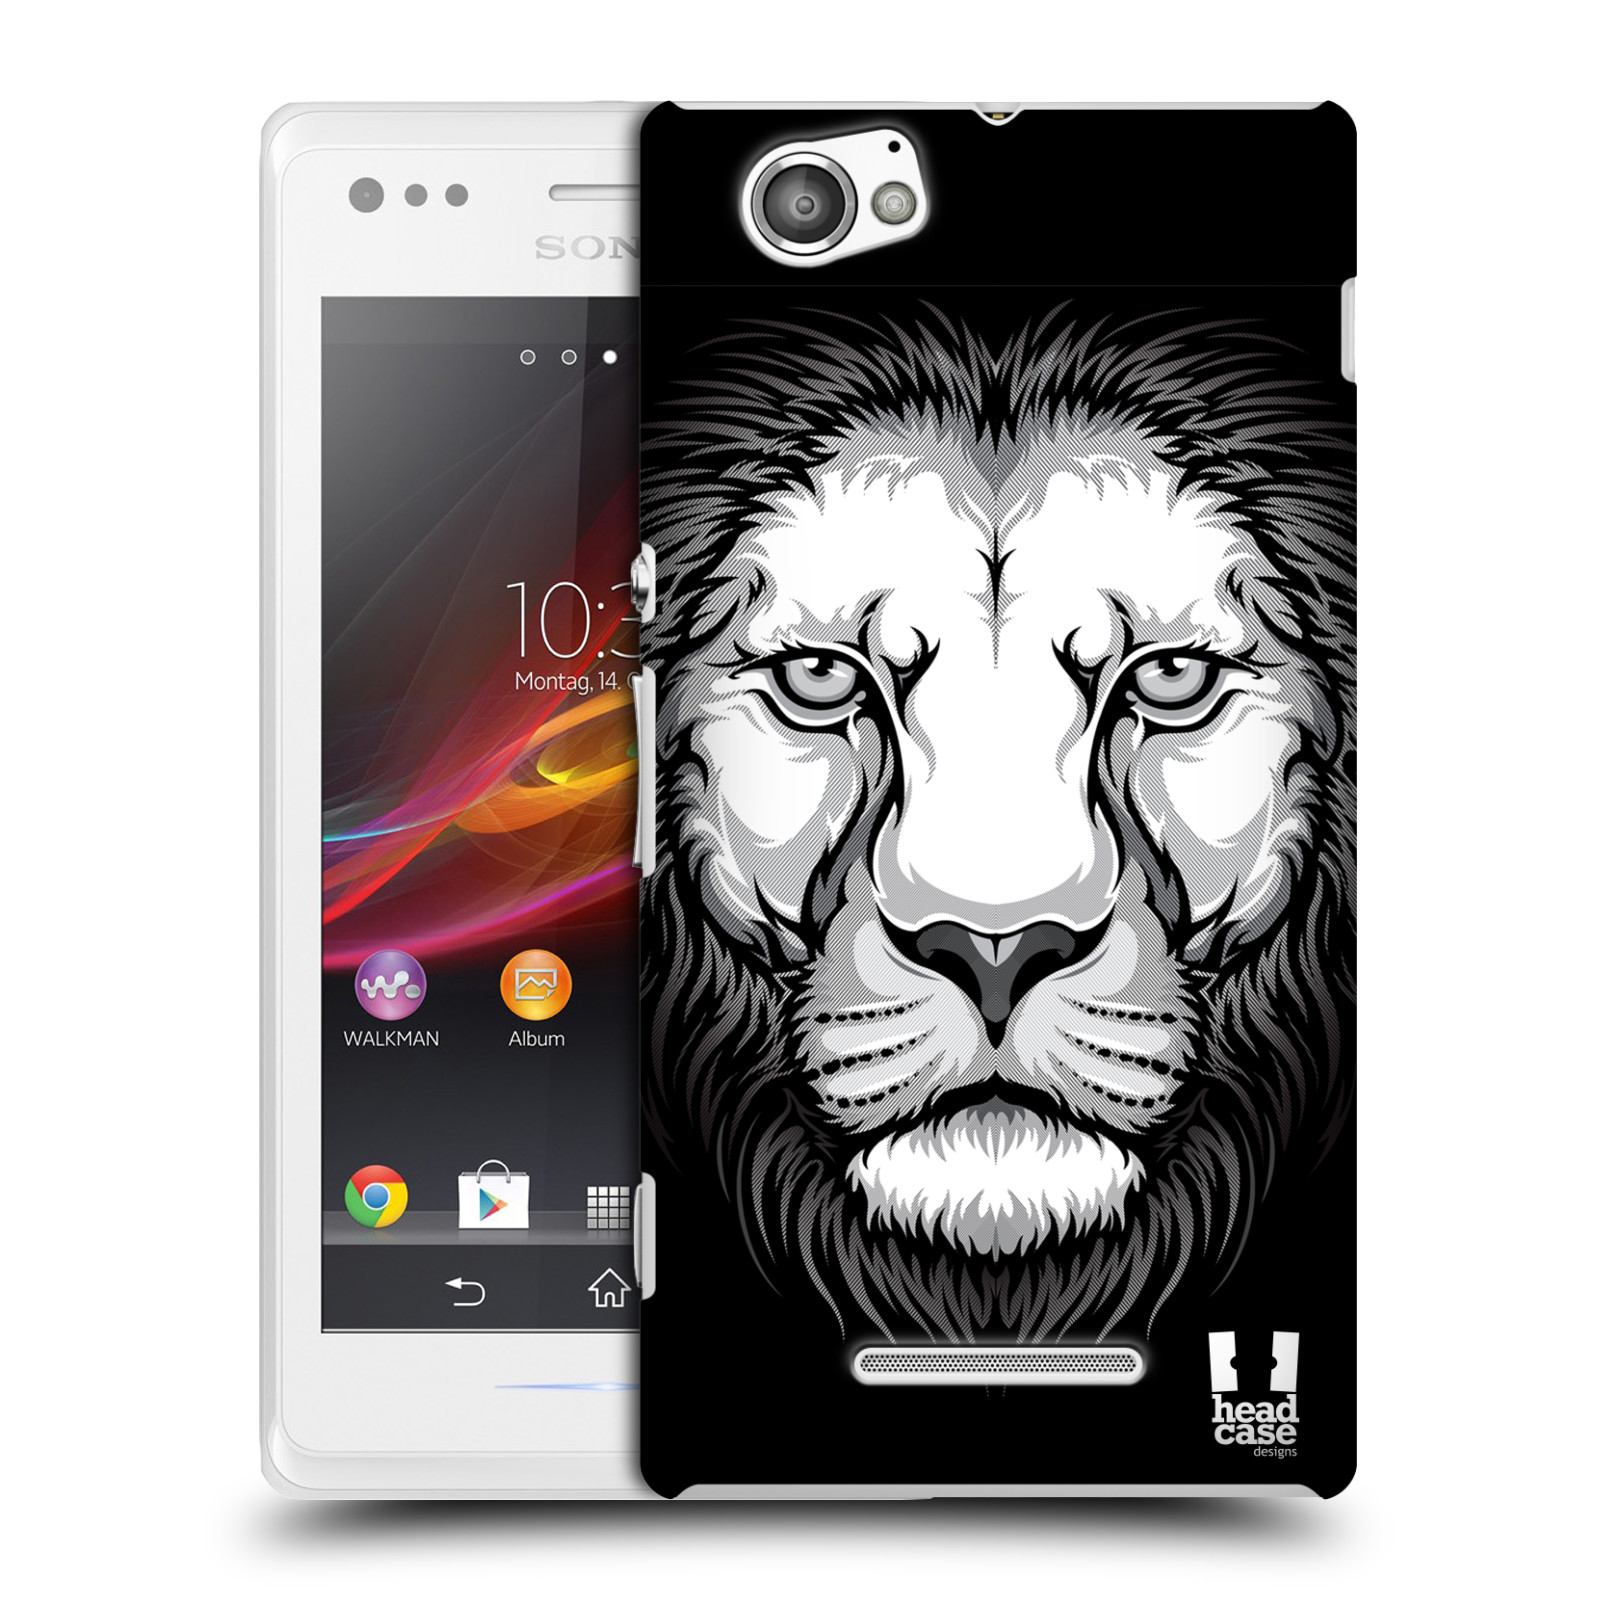 HEAD CASE plastový obal na mobil Sony Xperia M vzor Zvíře kreslená tvář lev